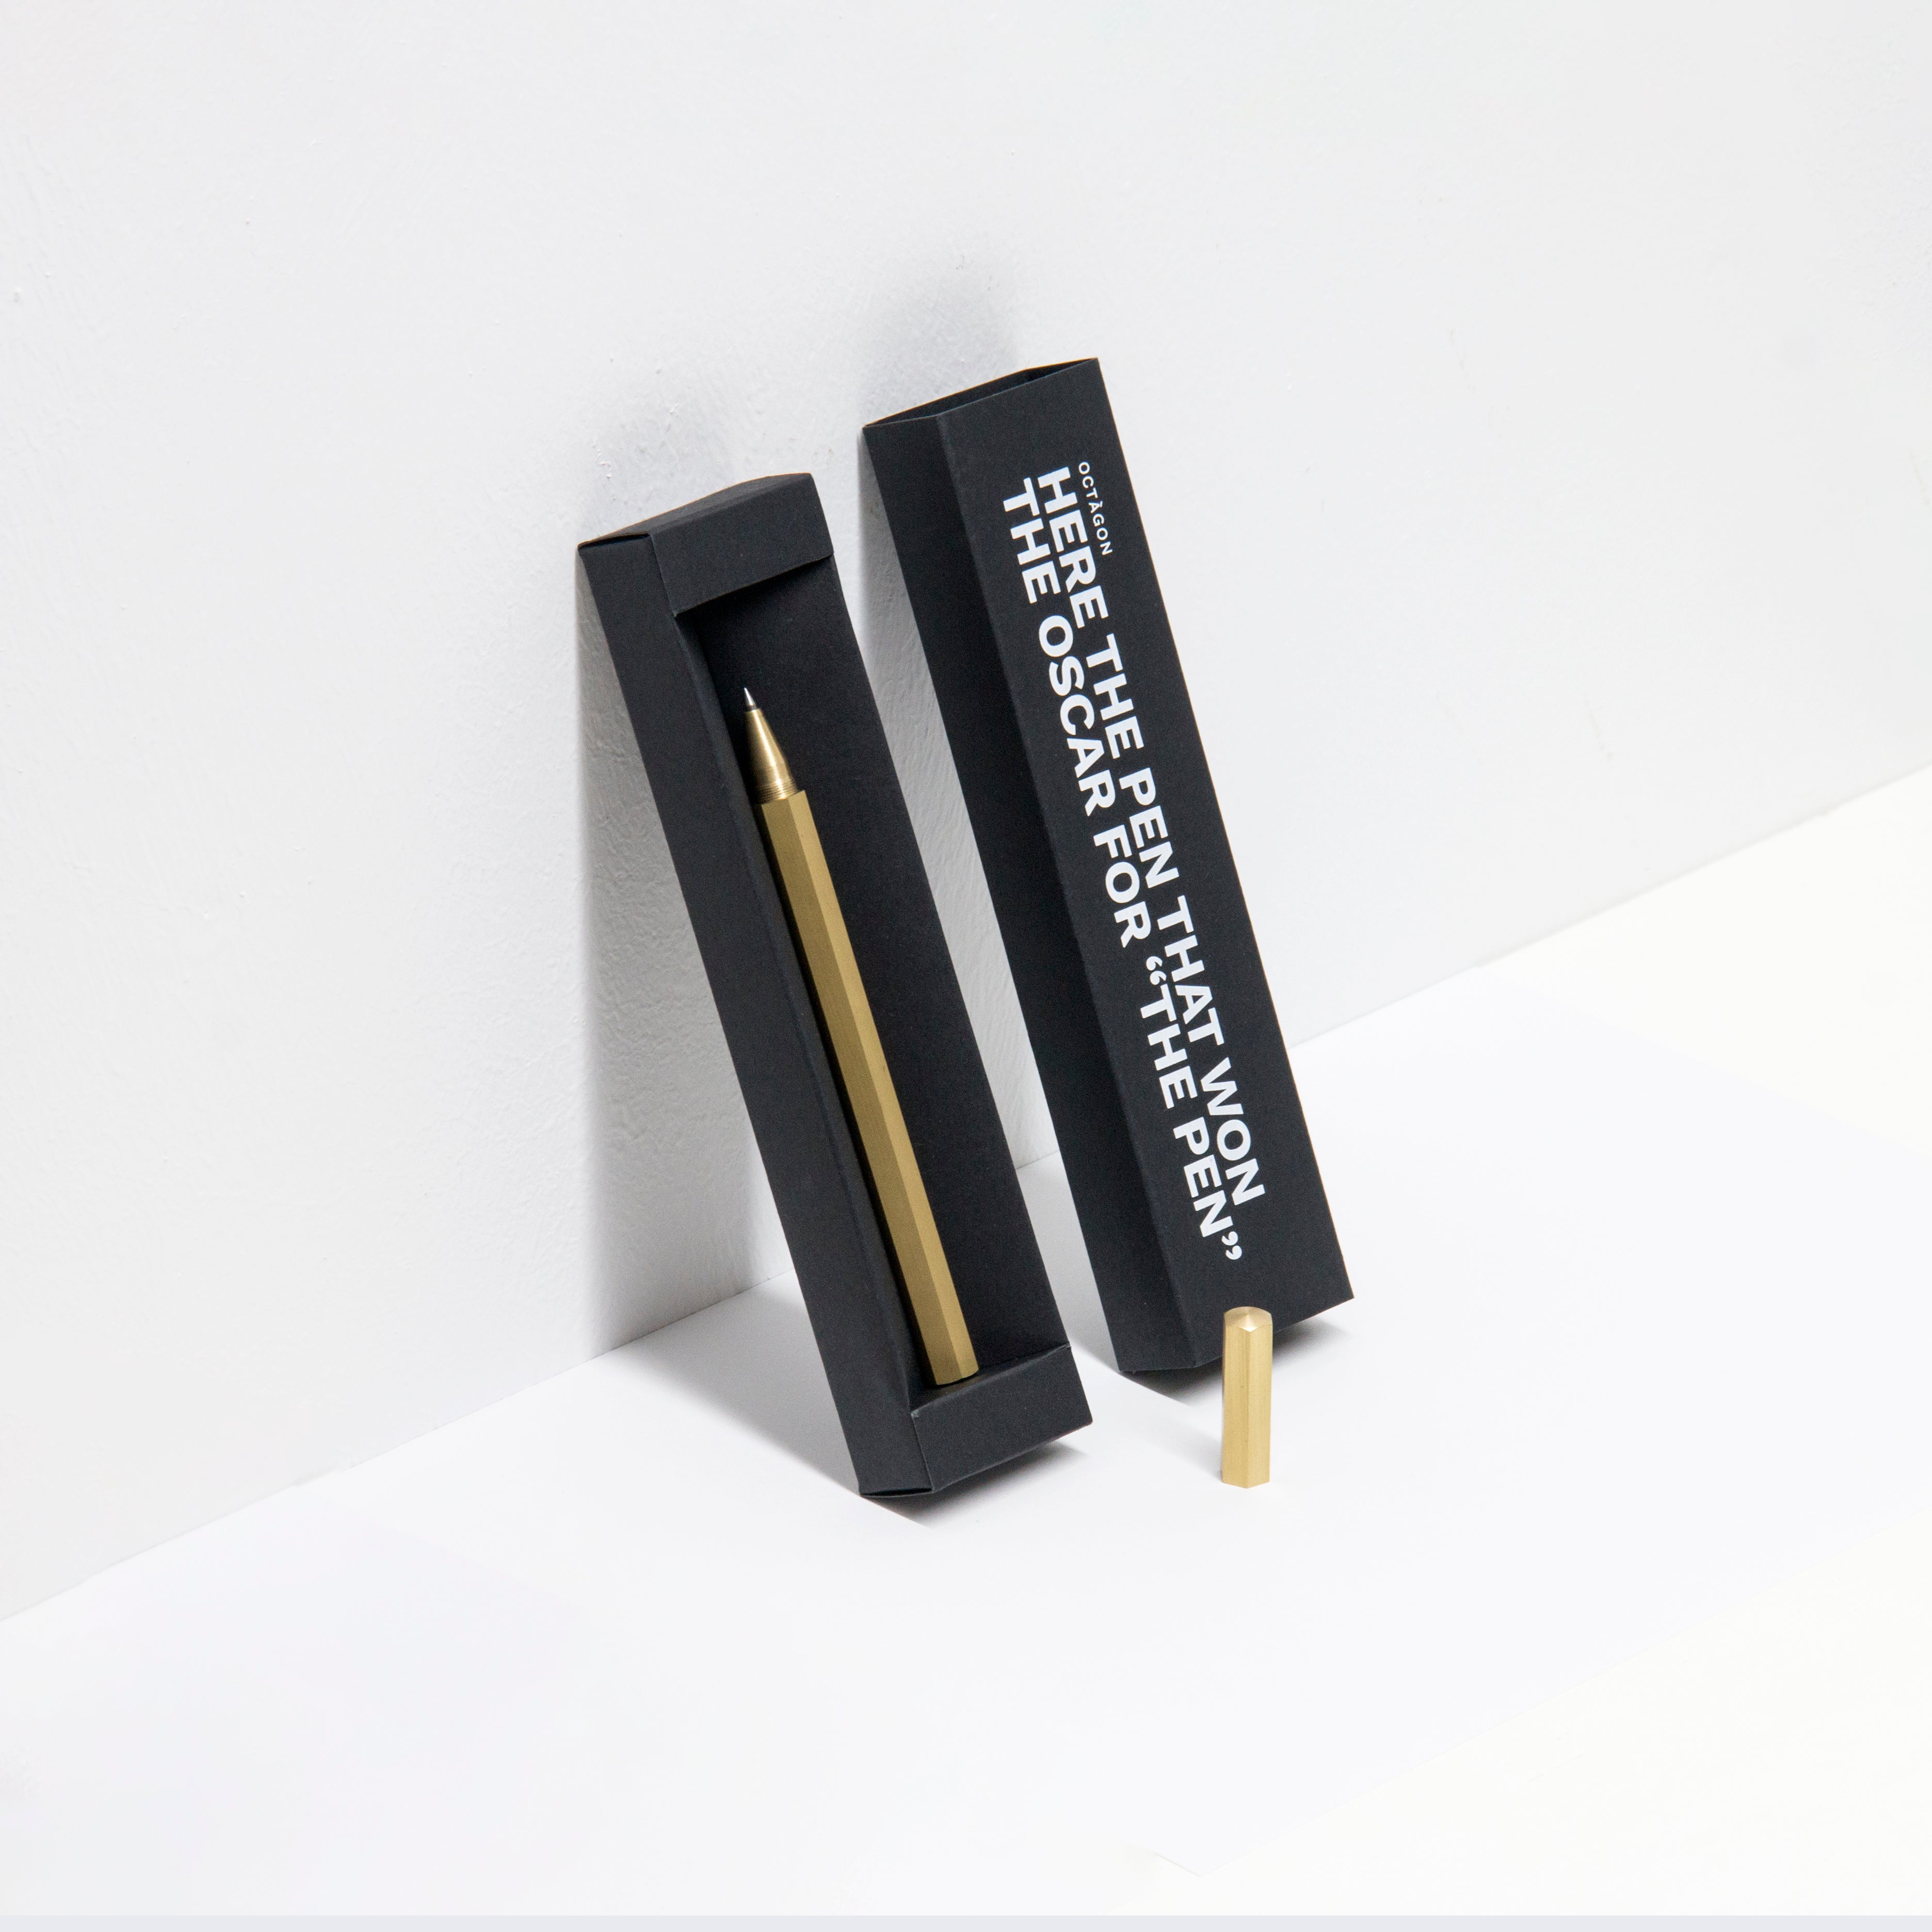 Octàgon Design Legacy Pen, minimal design and gold color